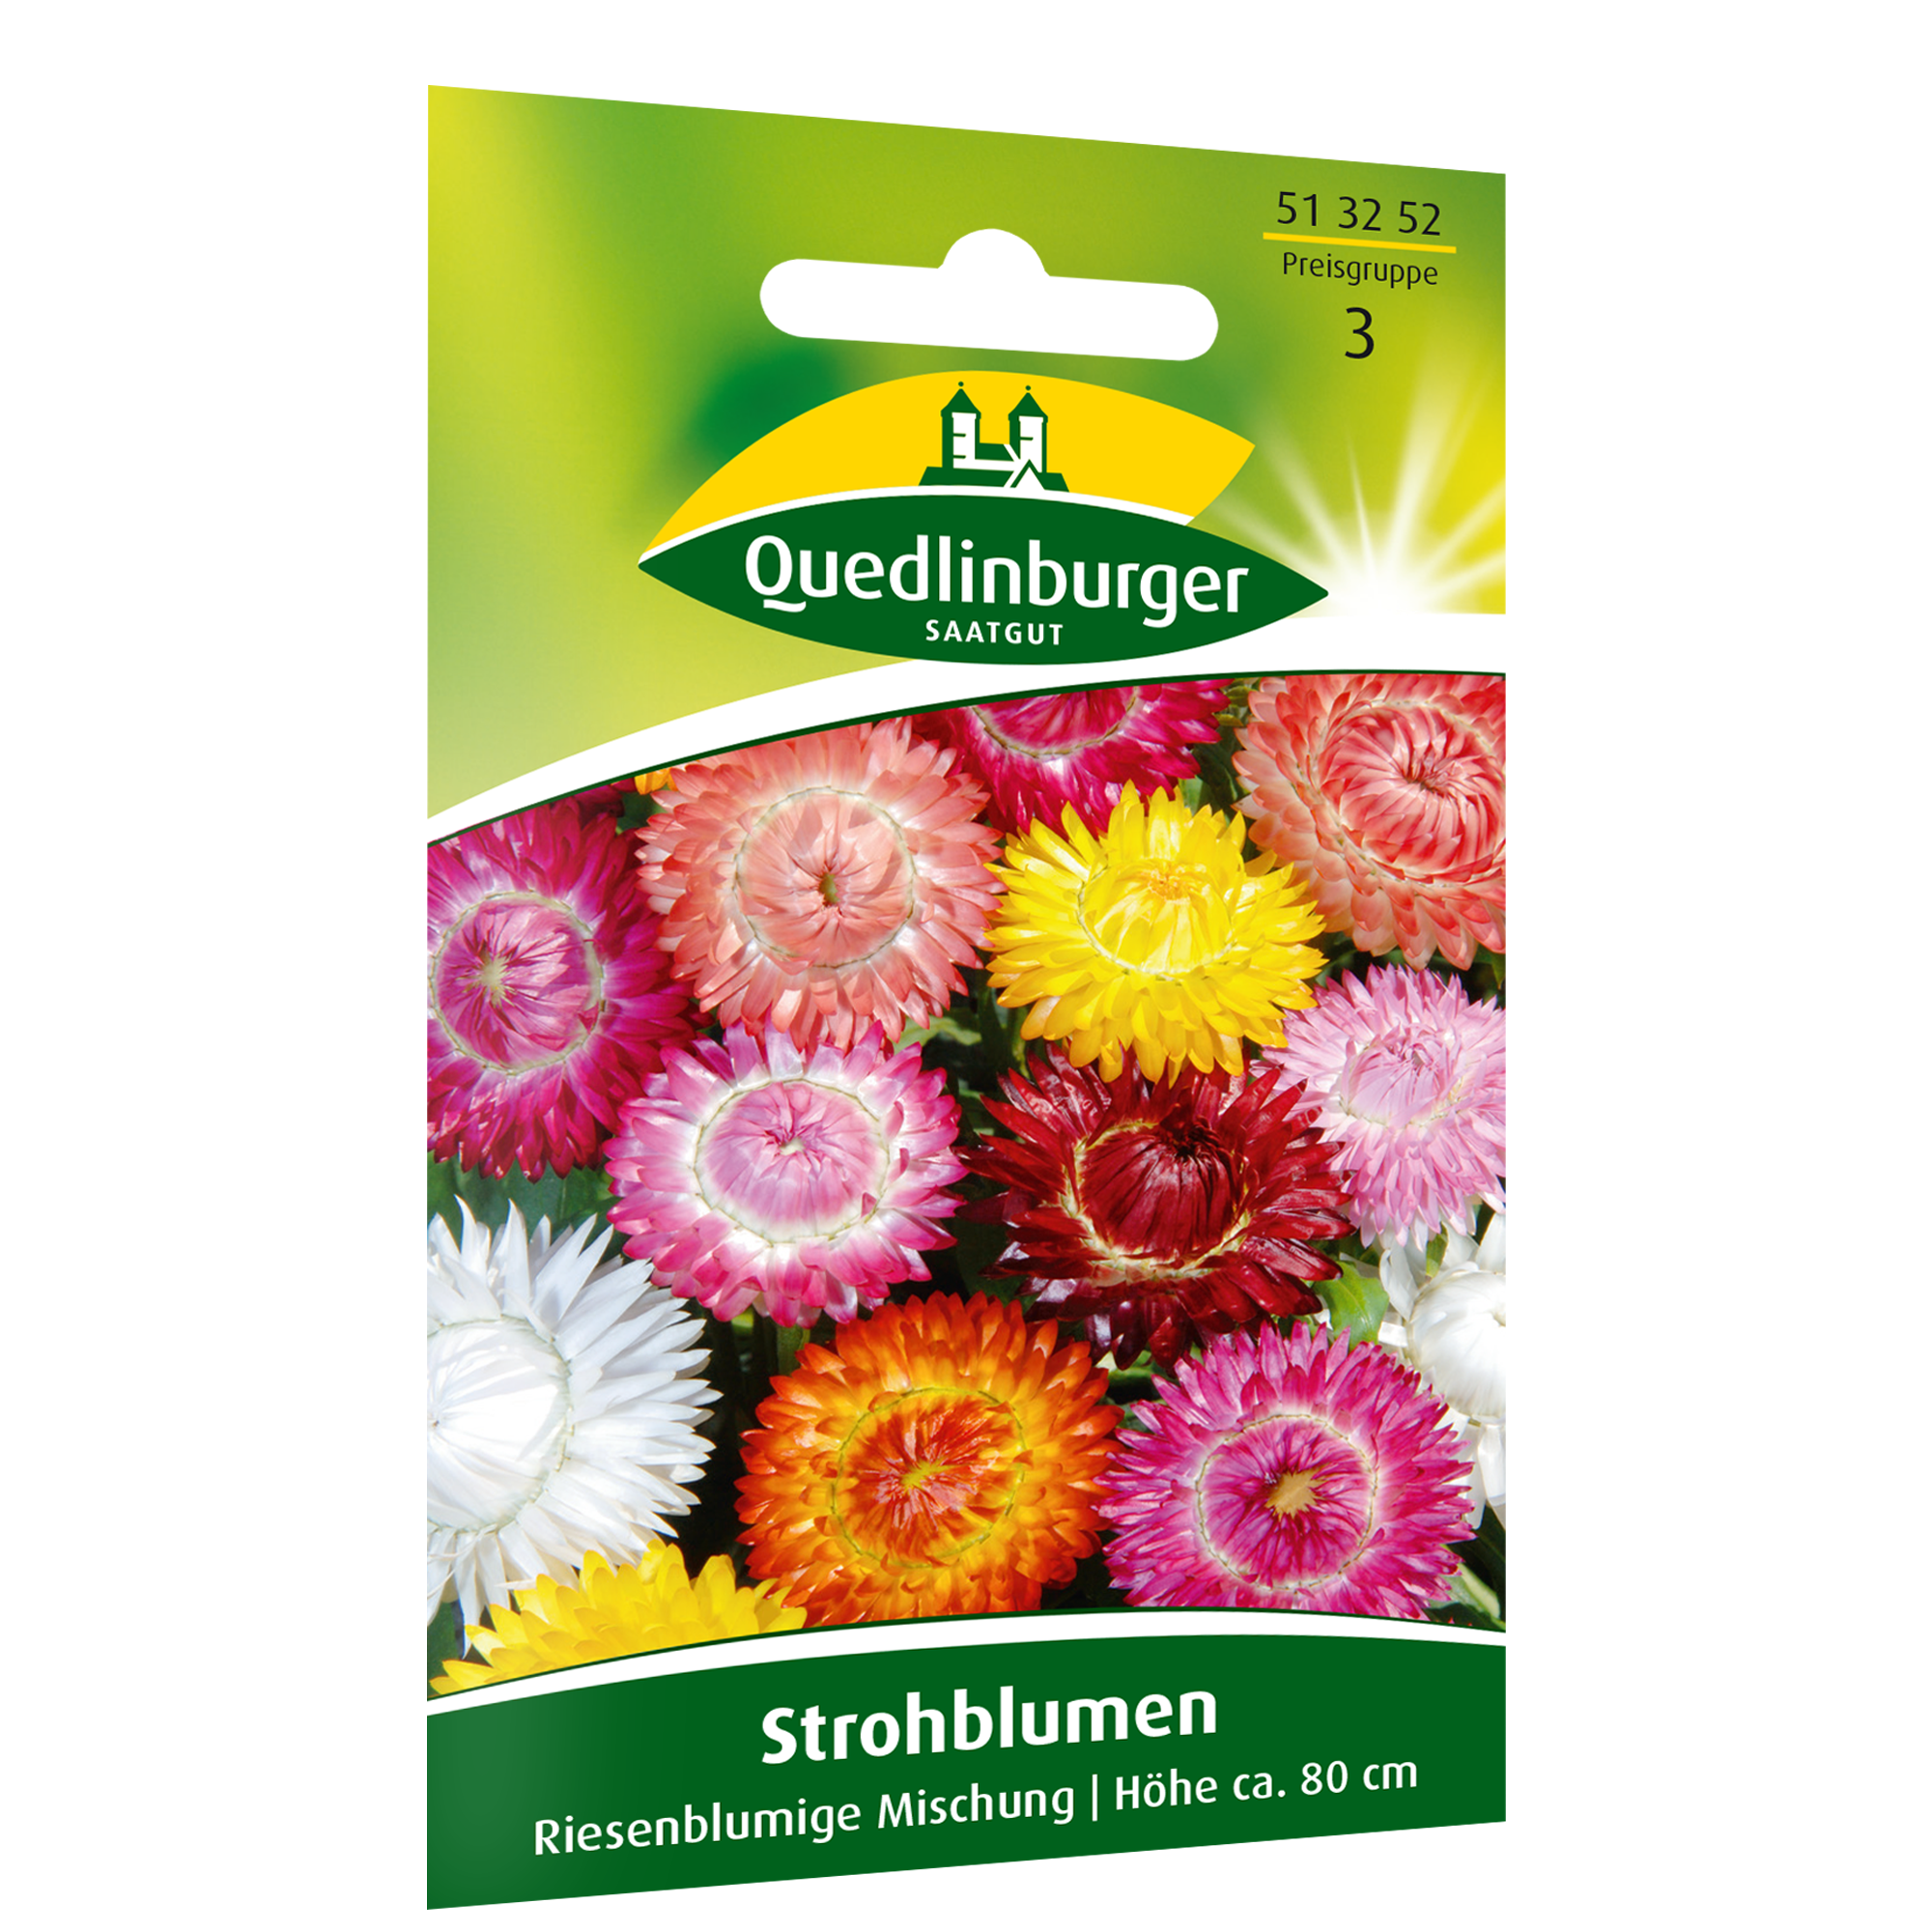 Strohblumen Riesenblumig, Mischung + product picture